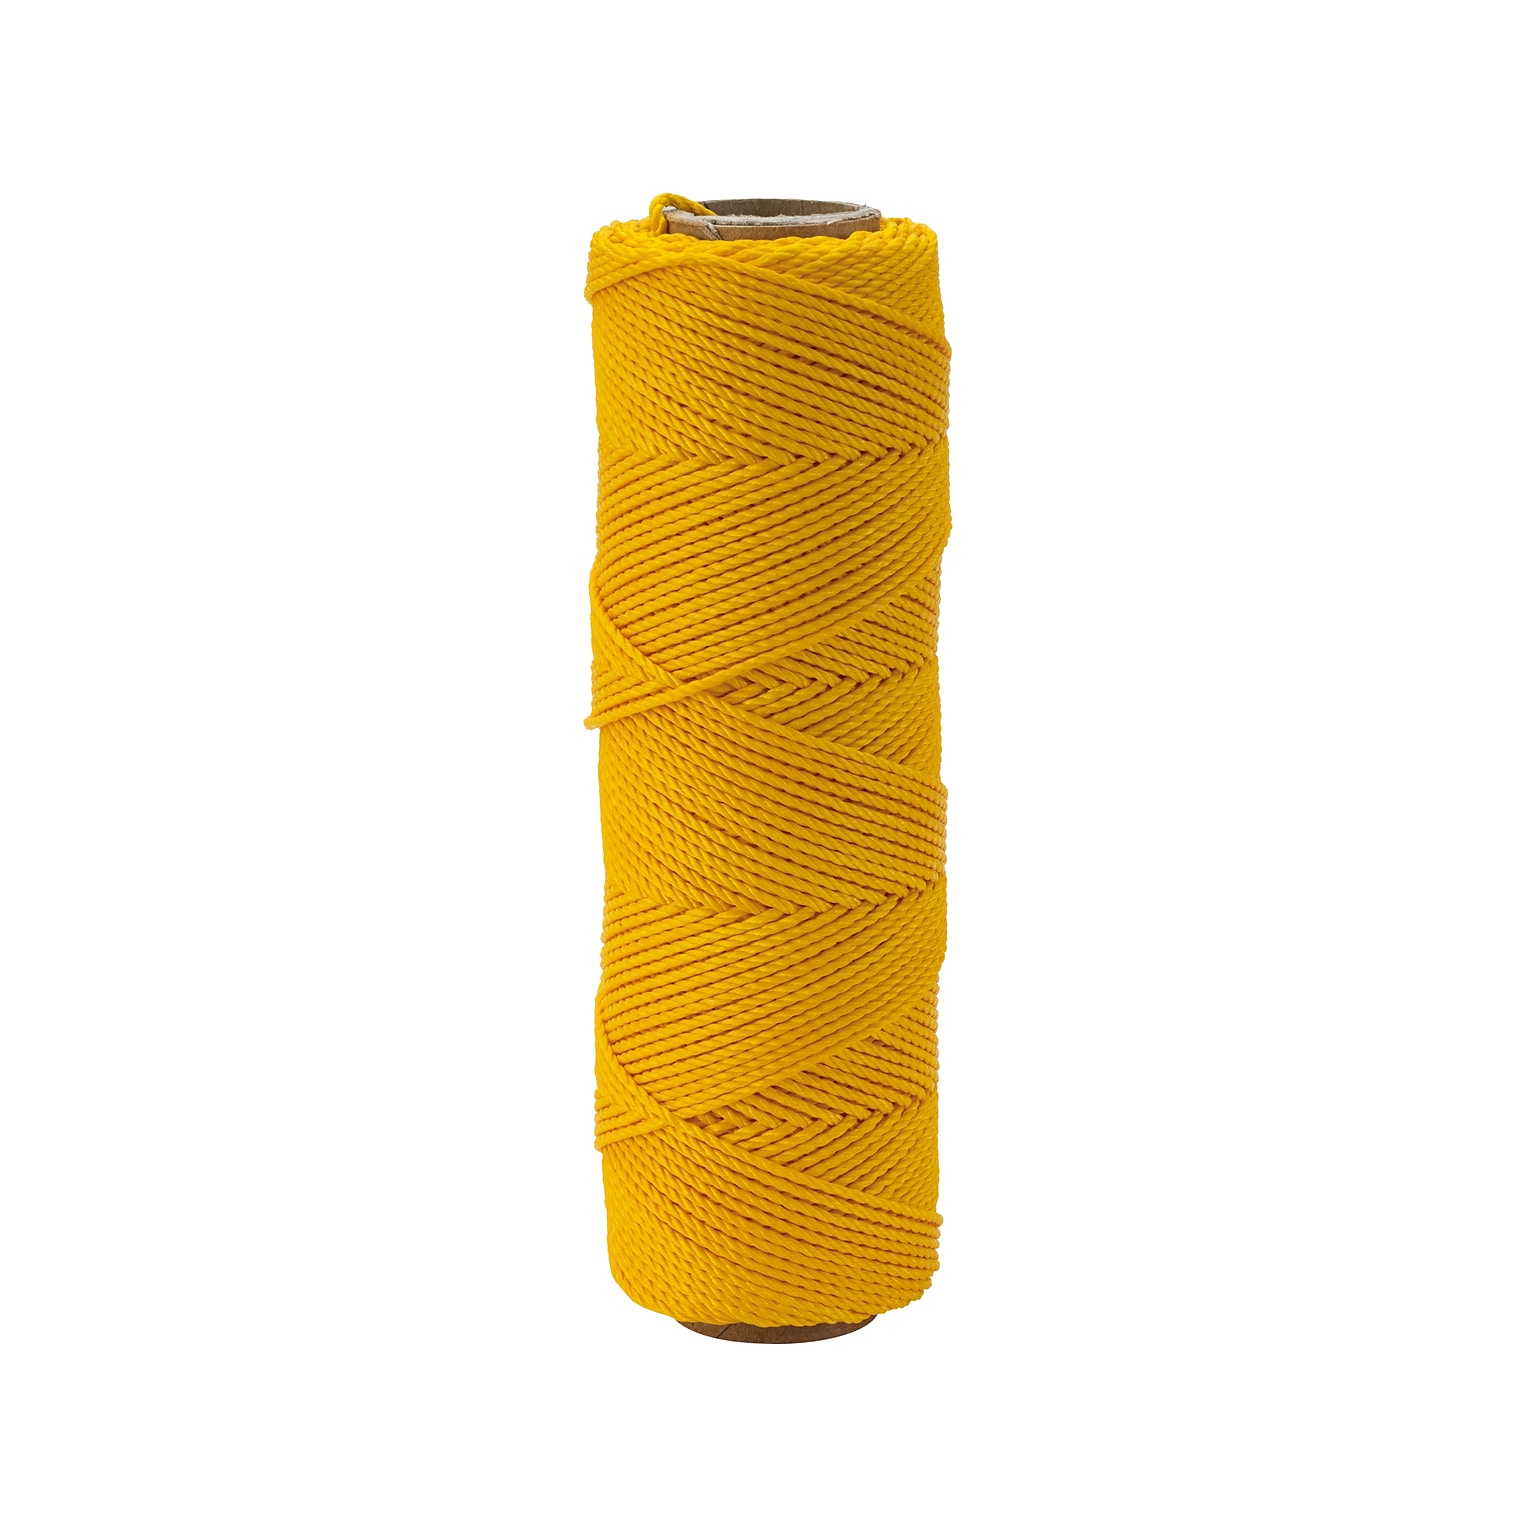 Mutual Industries Nylon Twisted Mason Twine, 0.06 x 275 ft., Yellow, Dozen (14661-41-275)